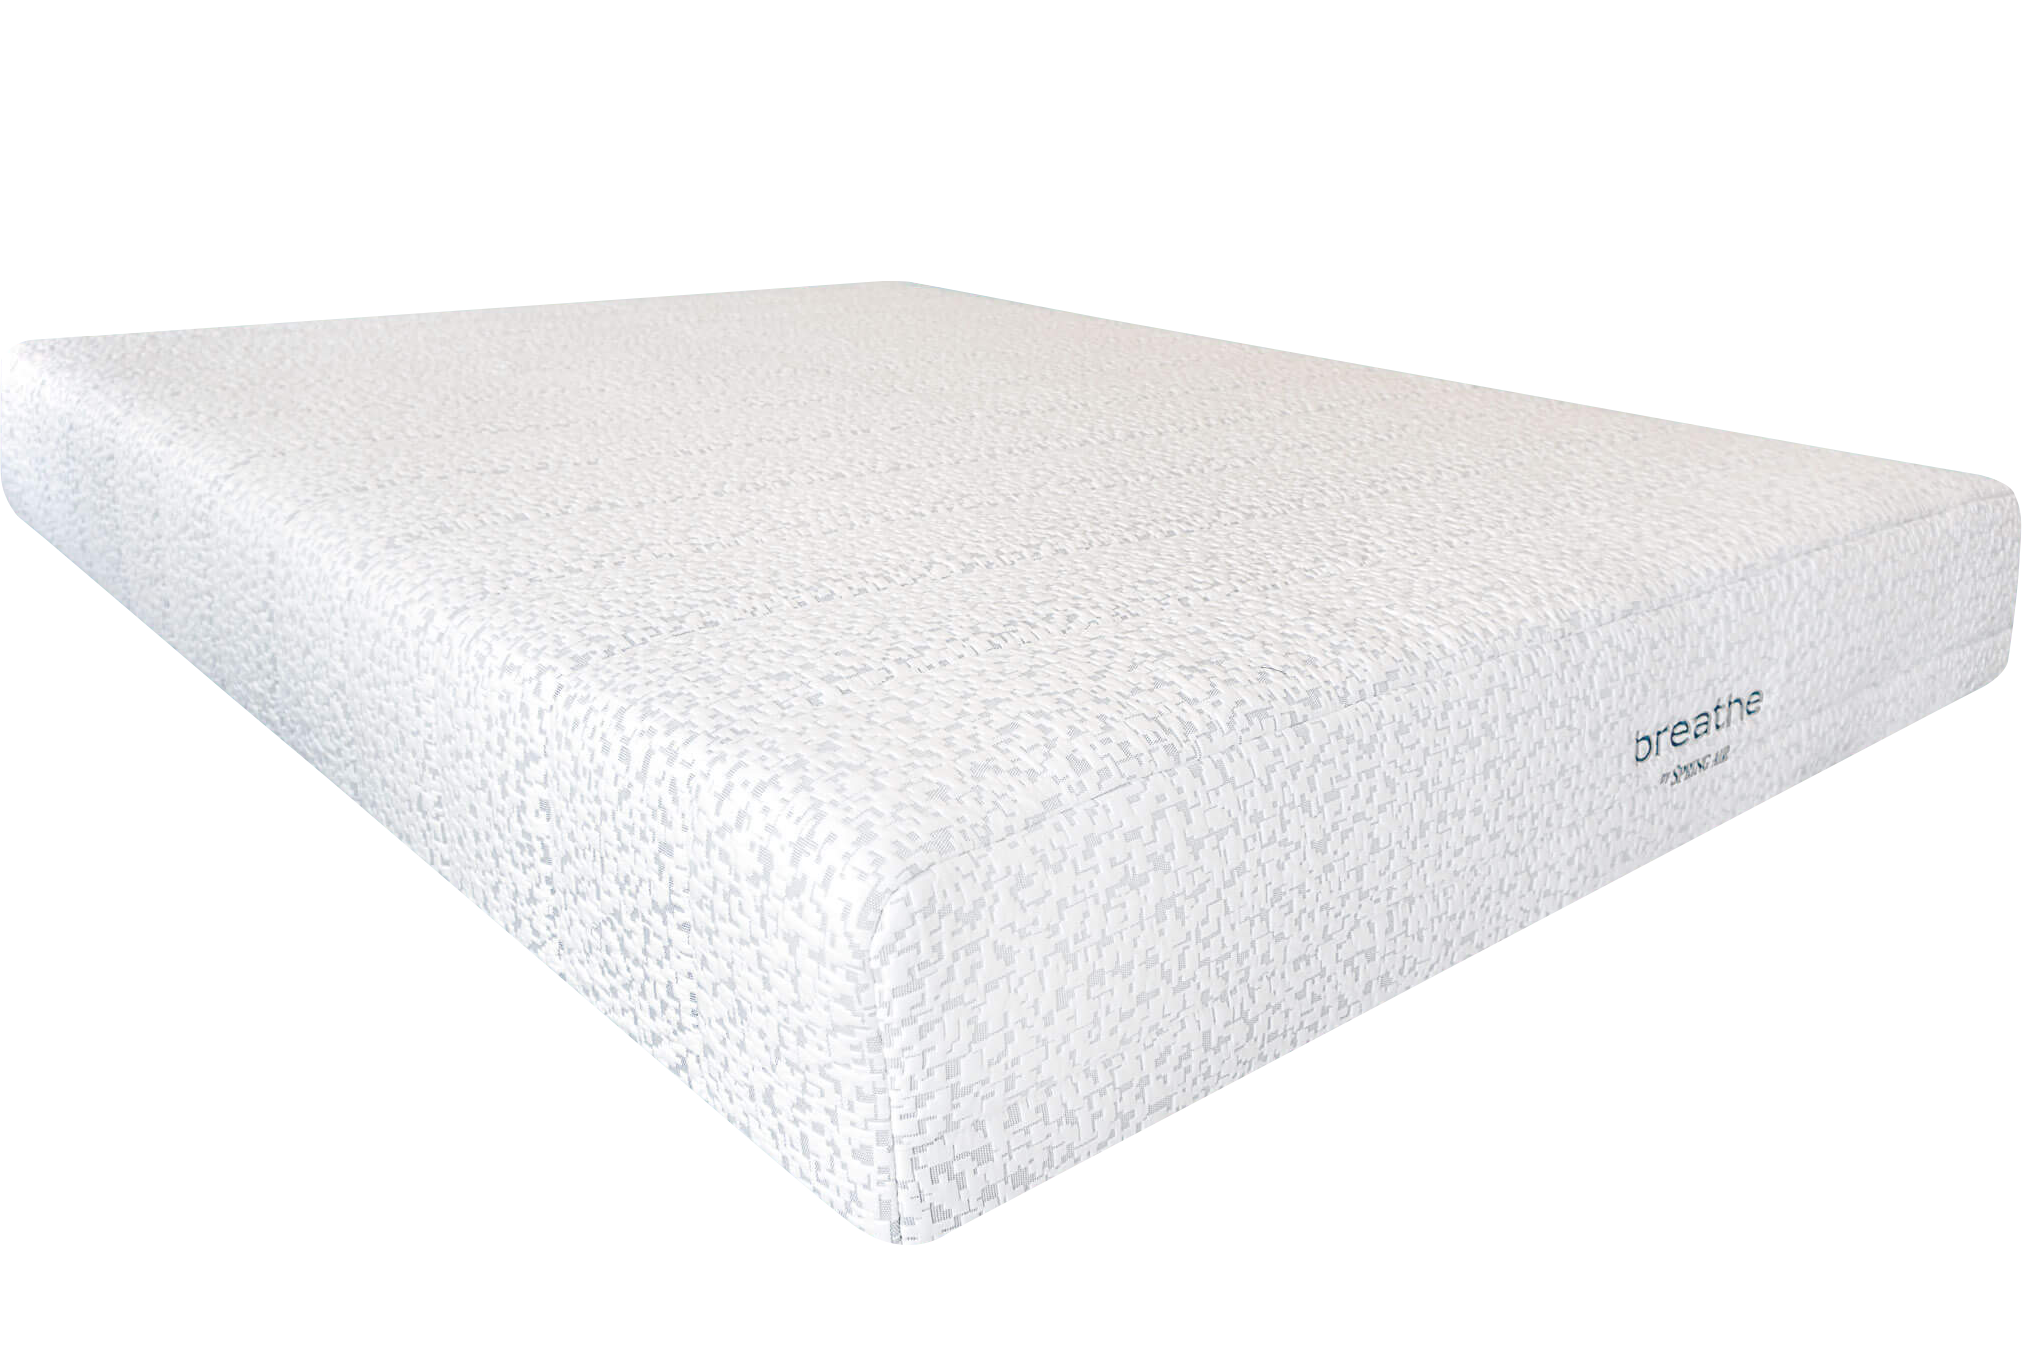 model number a01 serta memory foam mattress